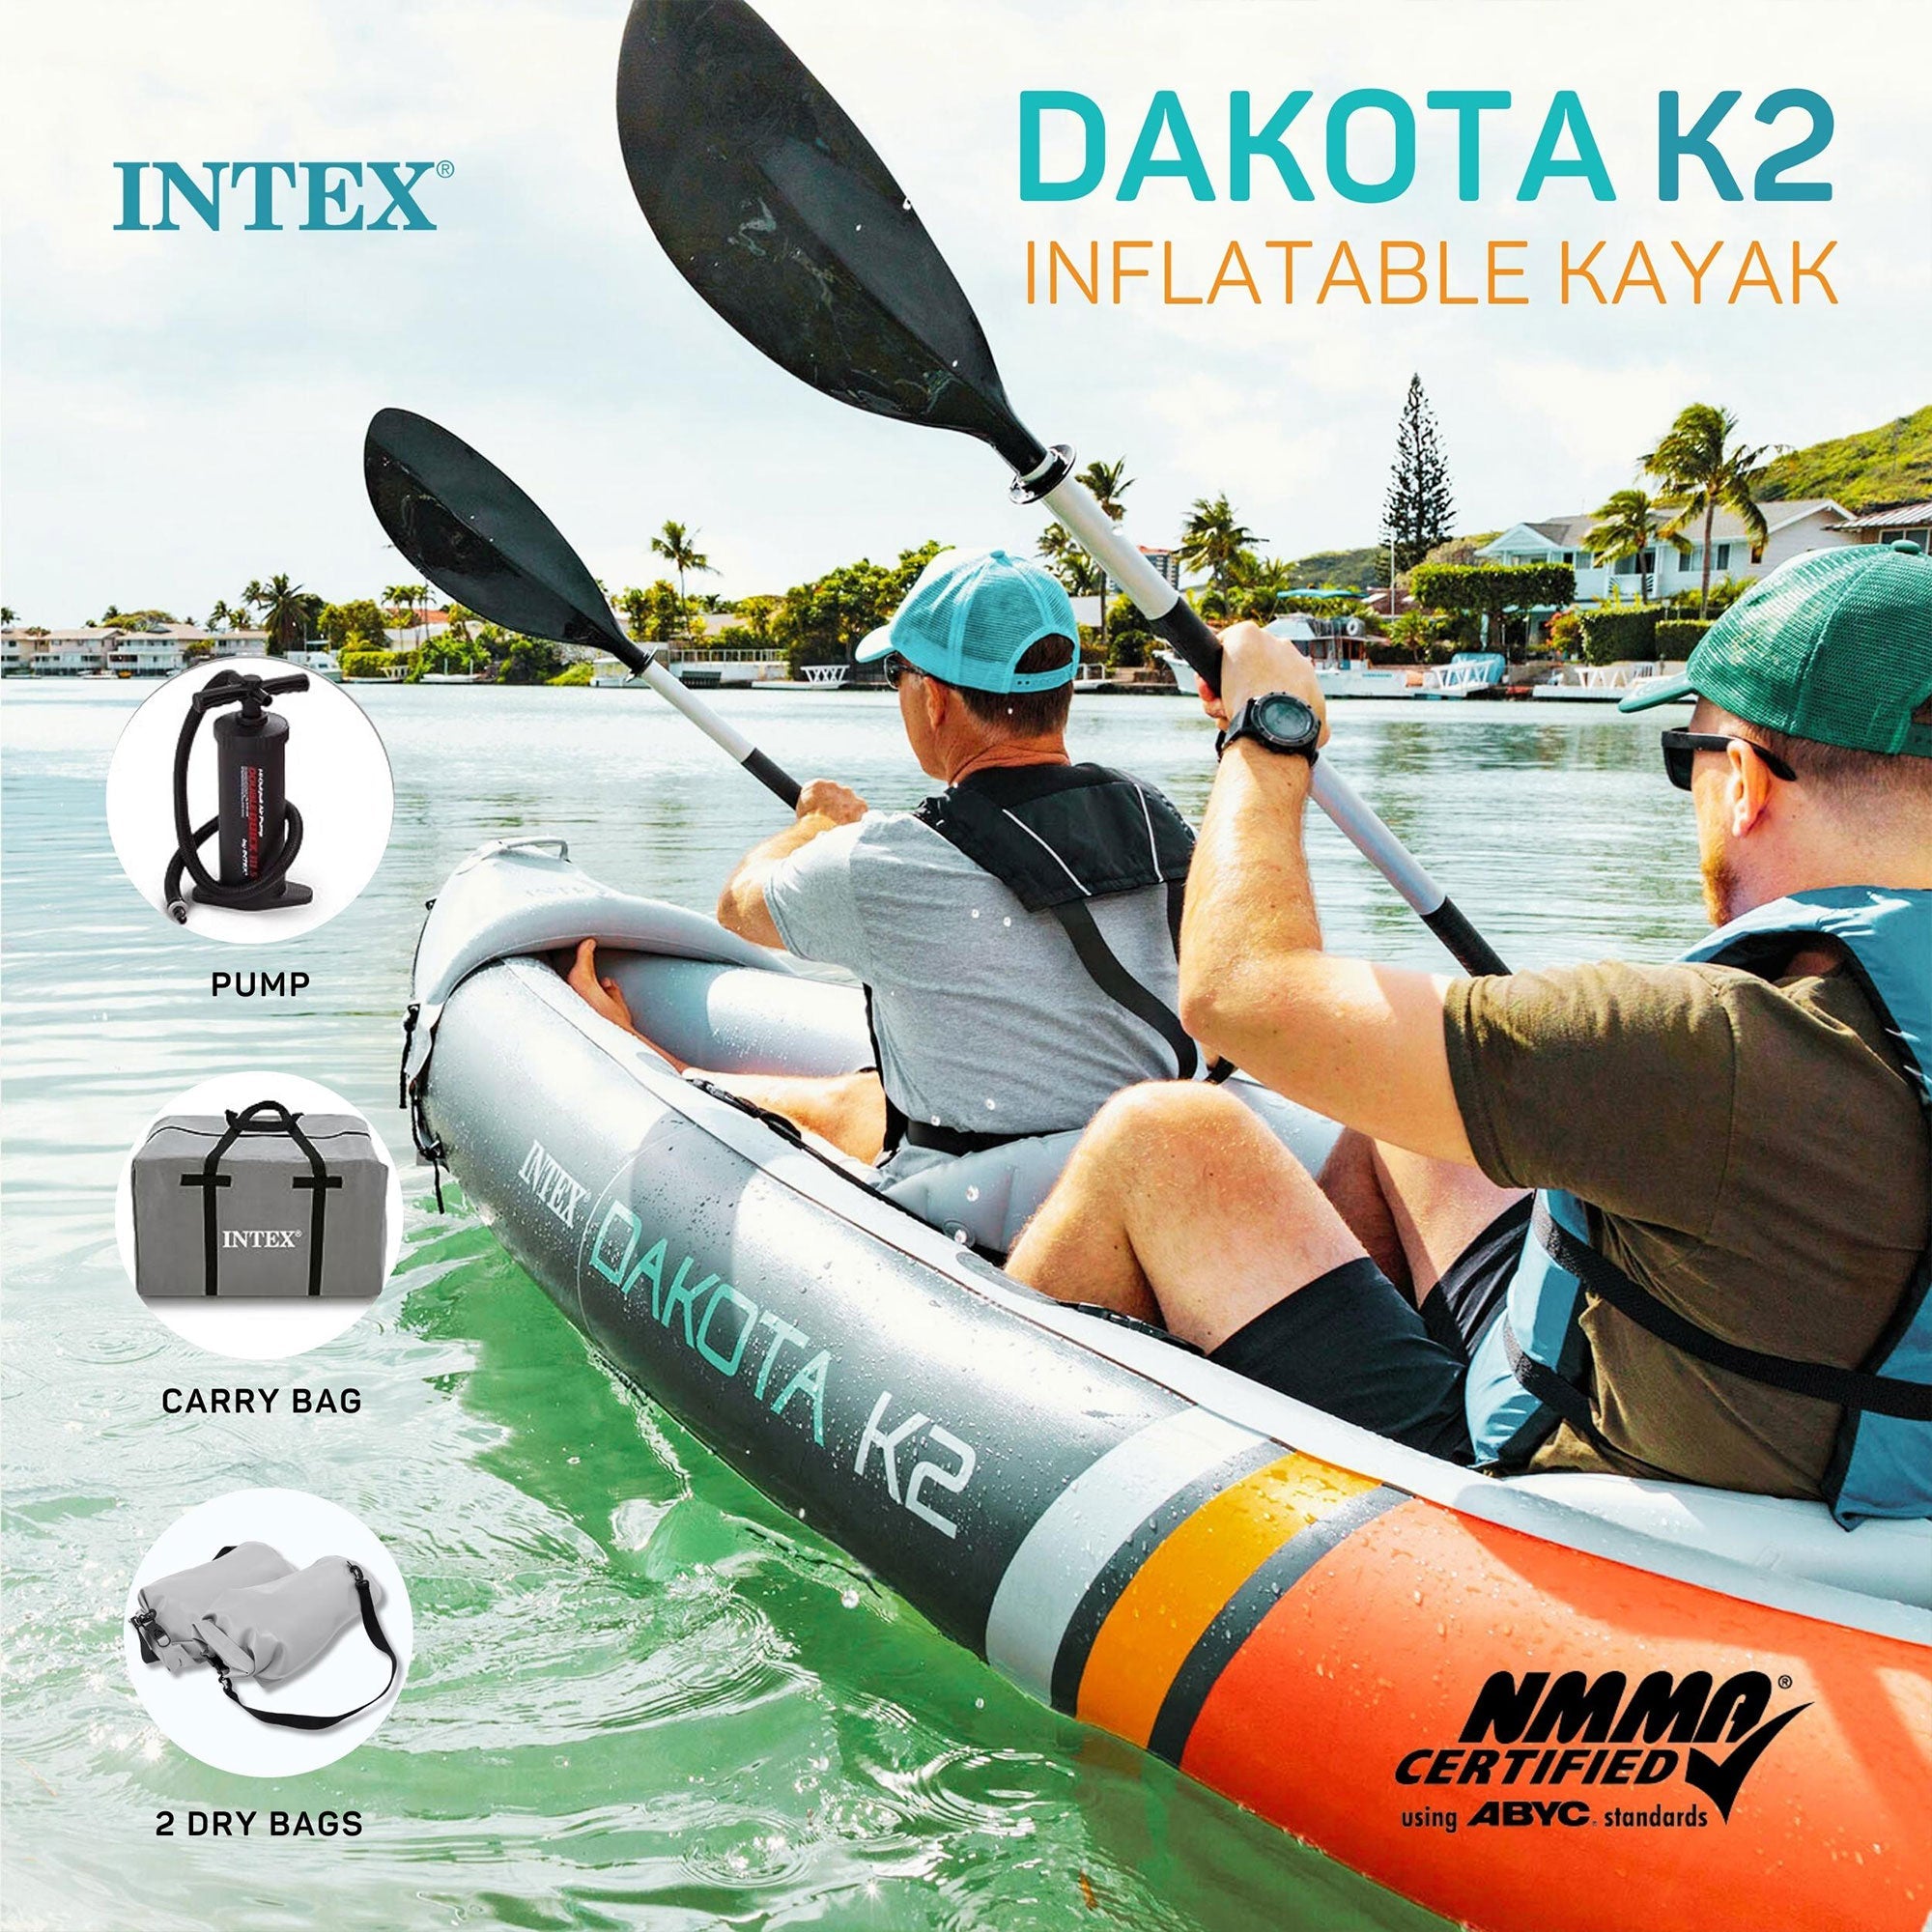 Intex-Dakota-K2-2-Person-Vinyl-Inflatable-Kayak-and-Accessory-Kit-w/-Oars-&-Pump-Kayaks